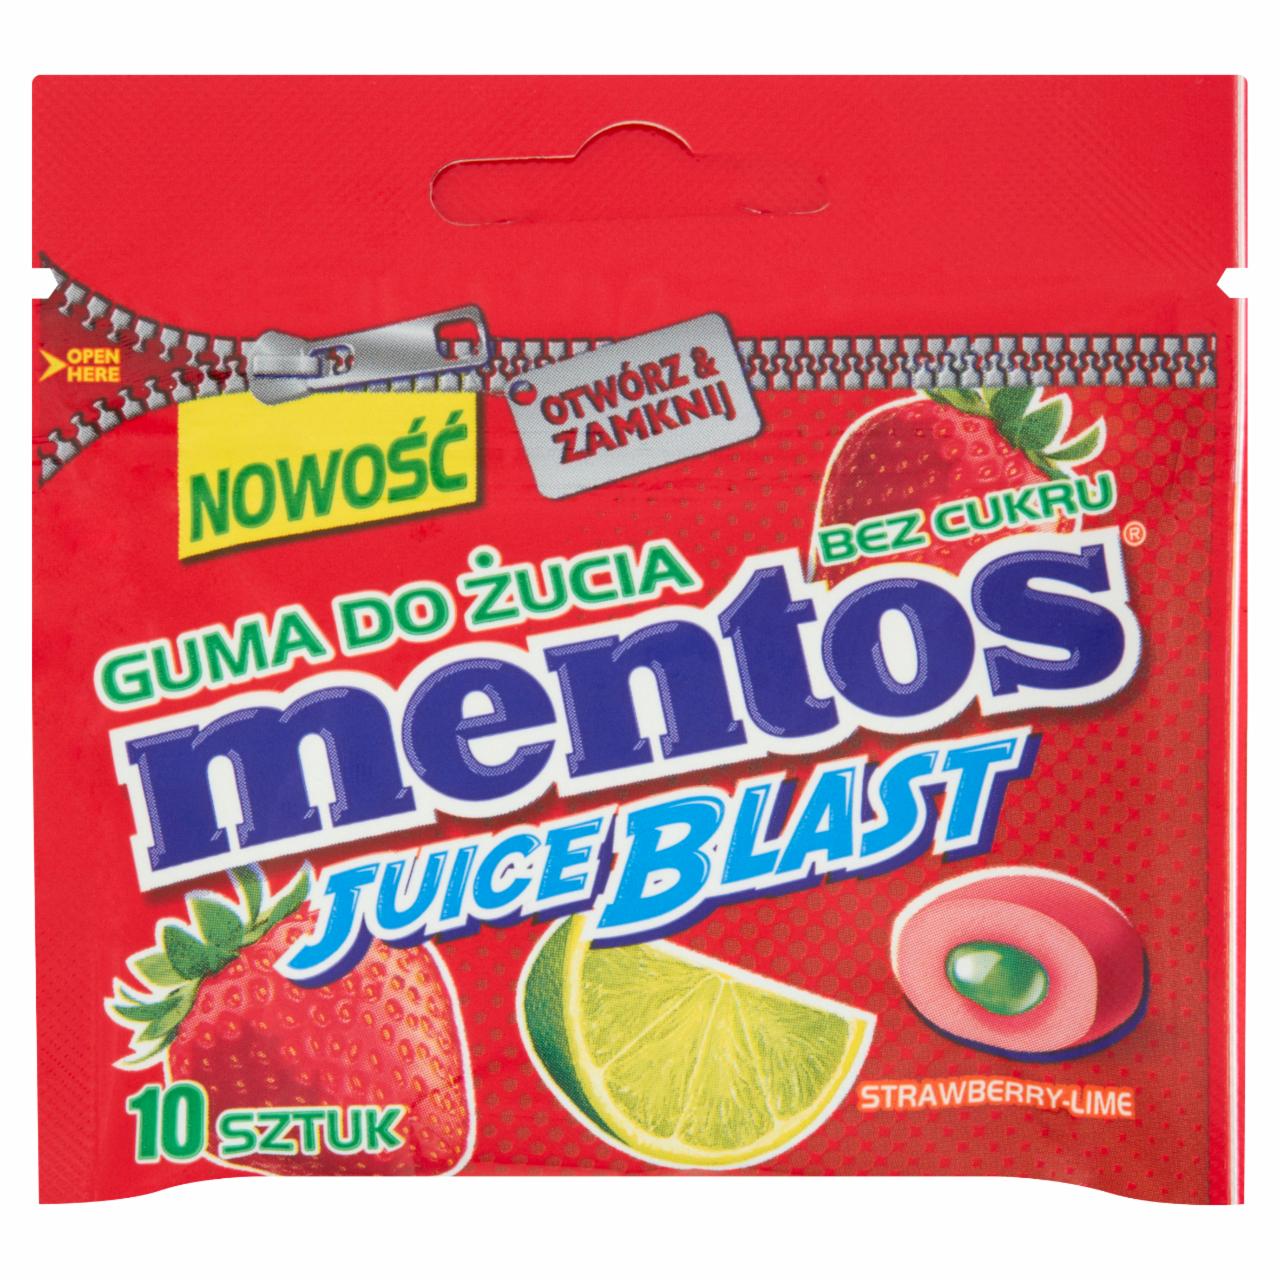 Zdjęcia - Mentos Juice Blast Truskawka Limonka Guma do żucia bez cukru 15 g (10 sztuk)